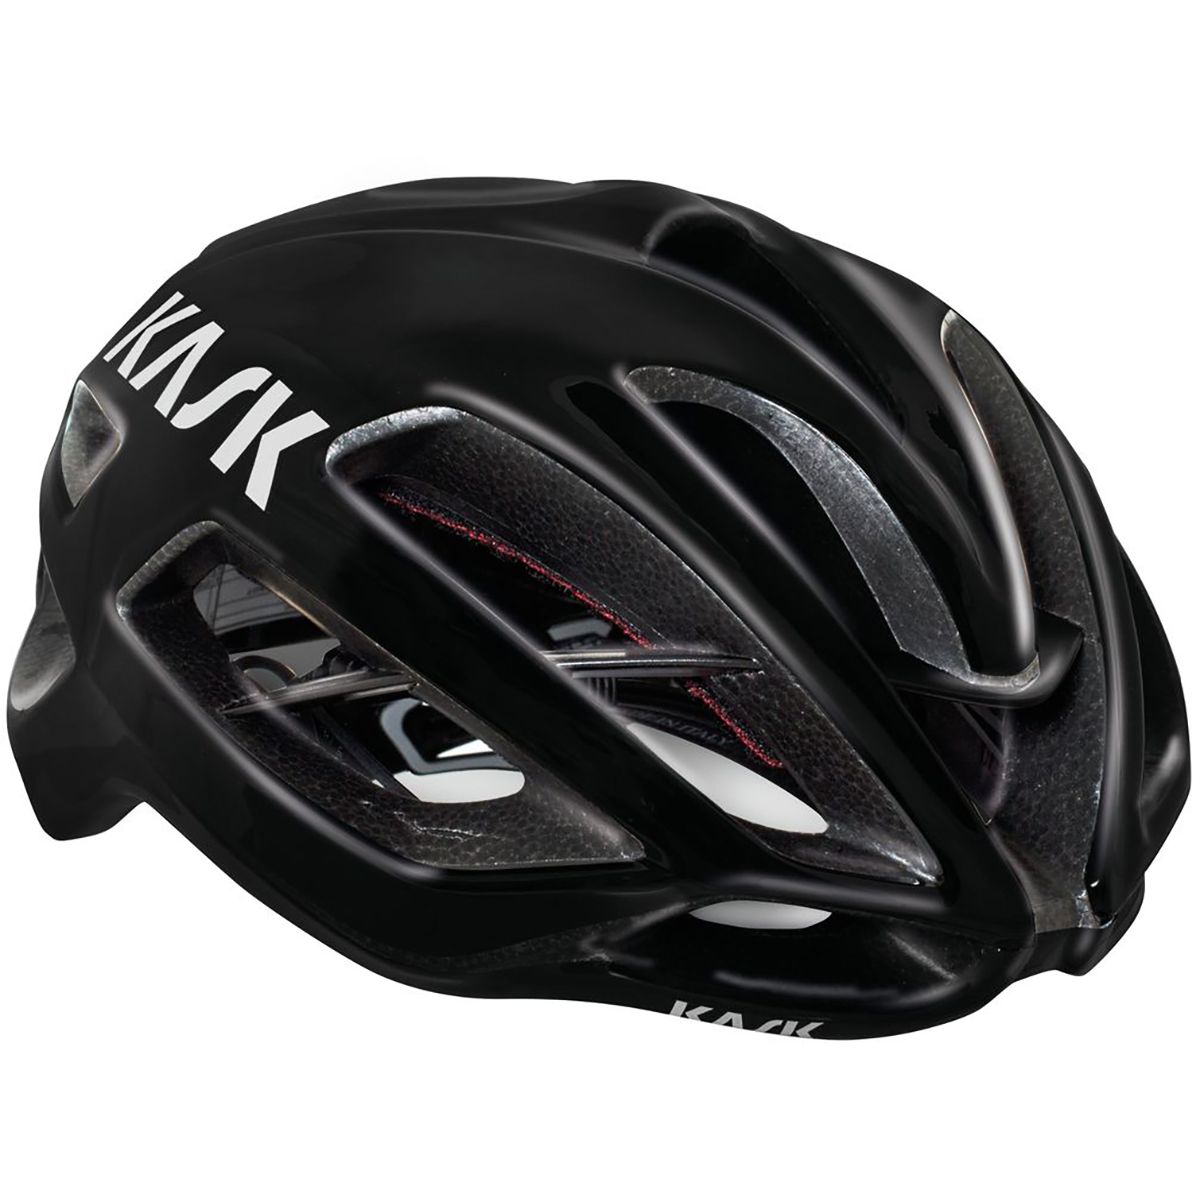 Kask Protone Helmet Black/Black, M